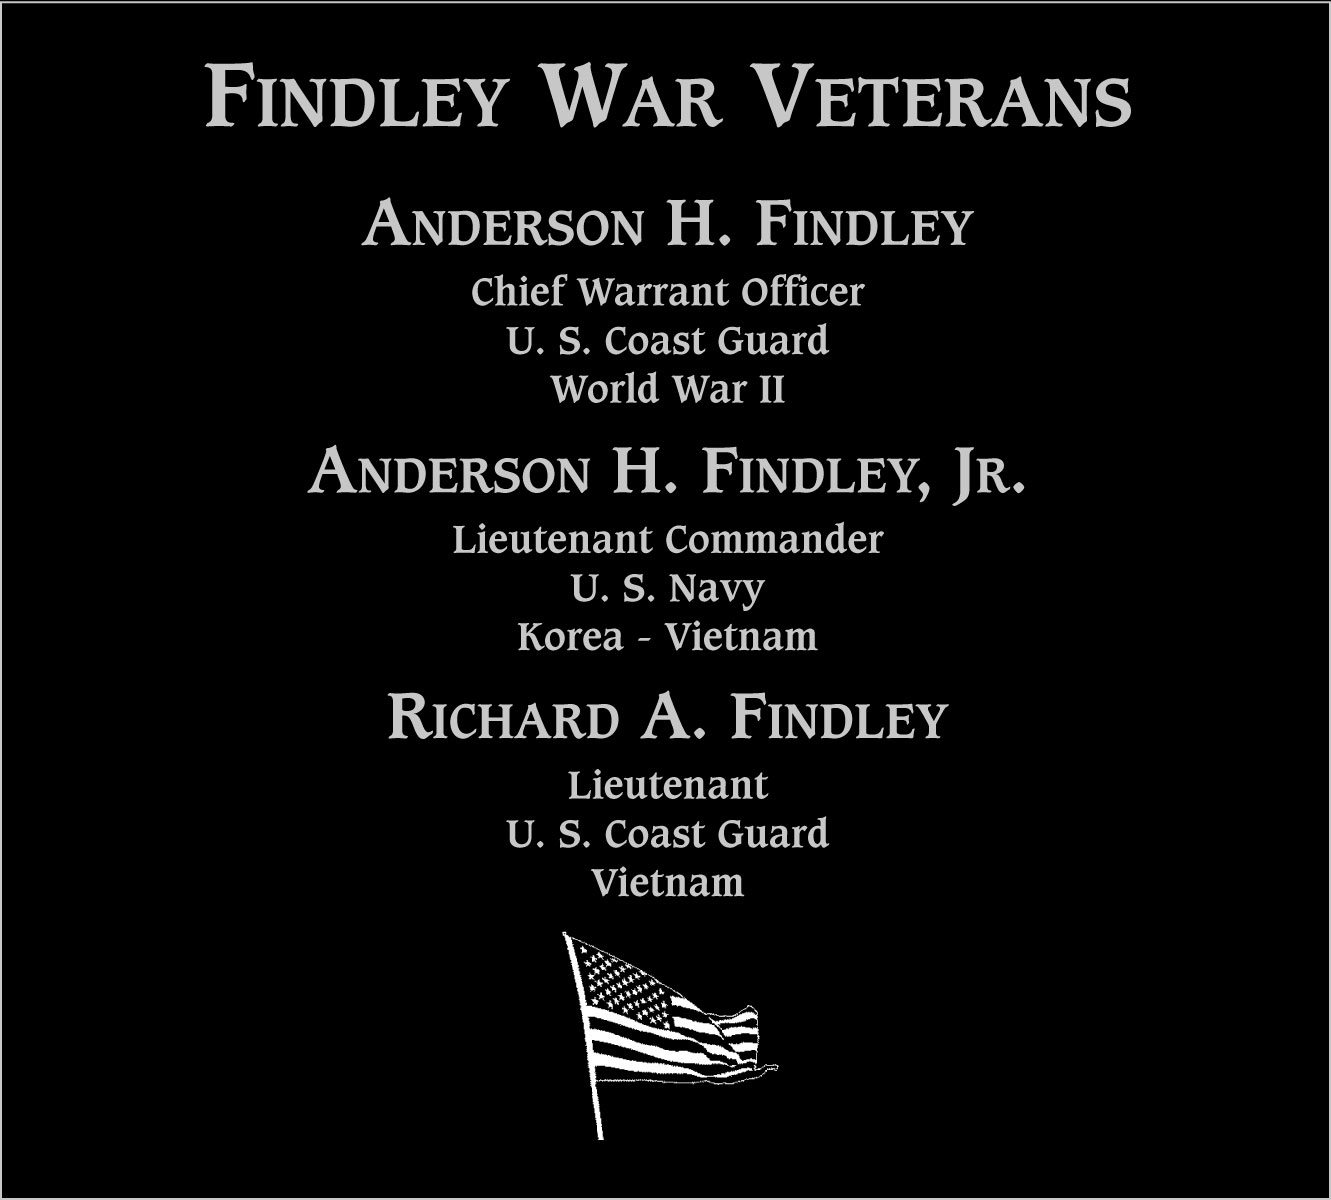 Anderson H. Findley jr